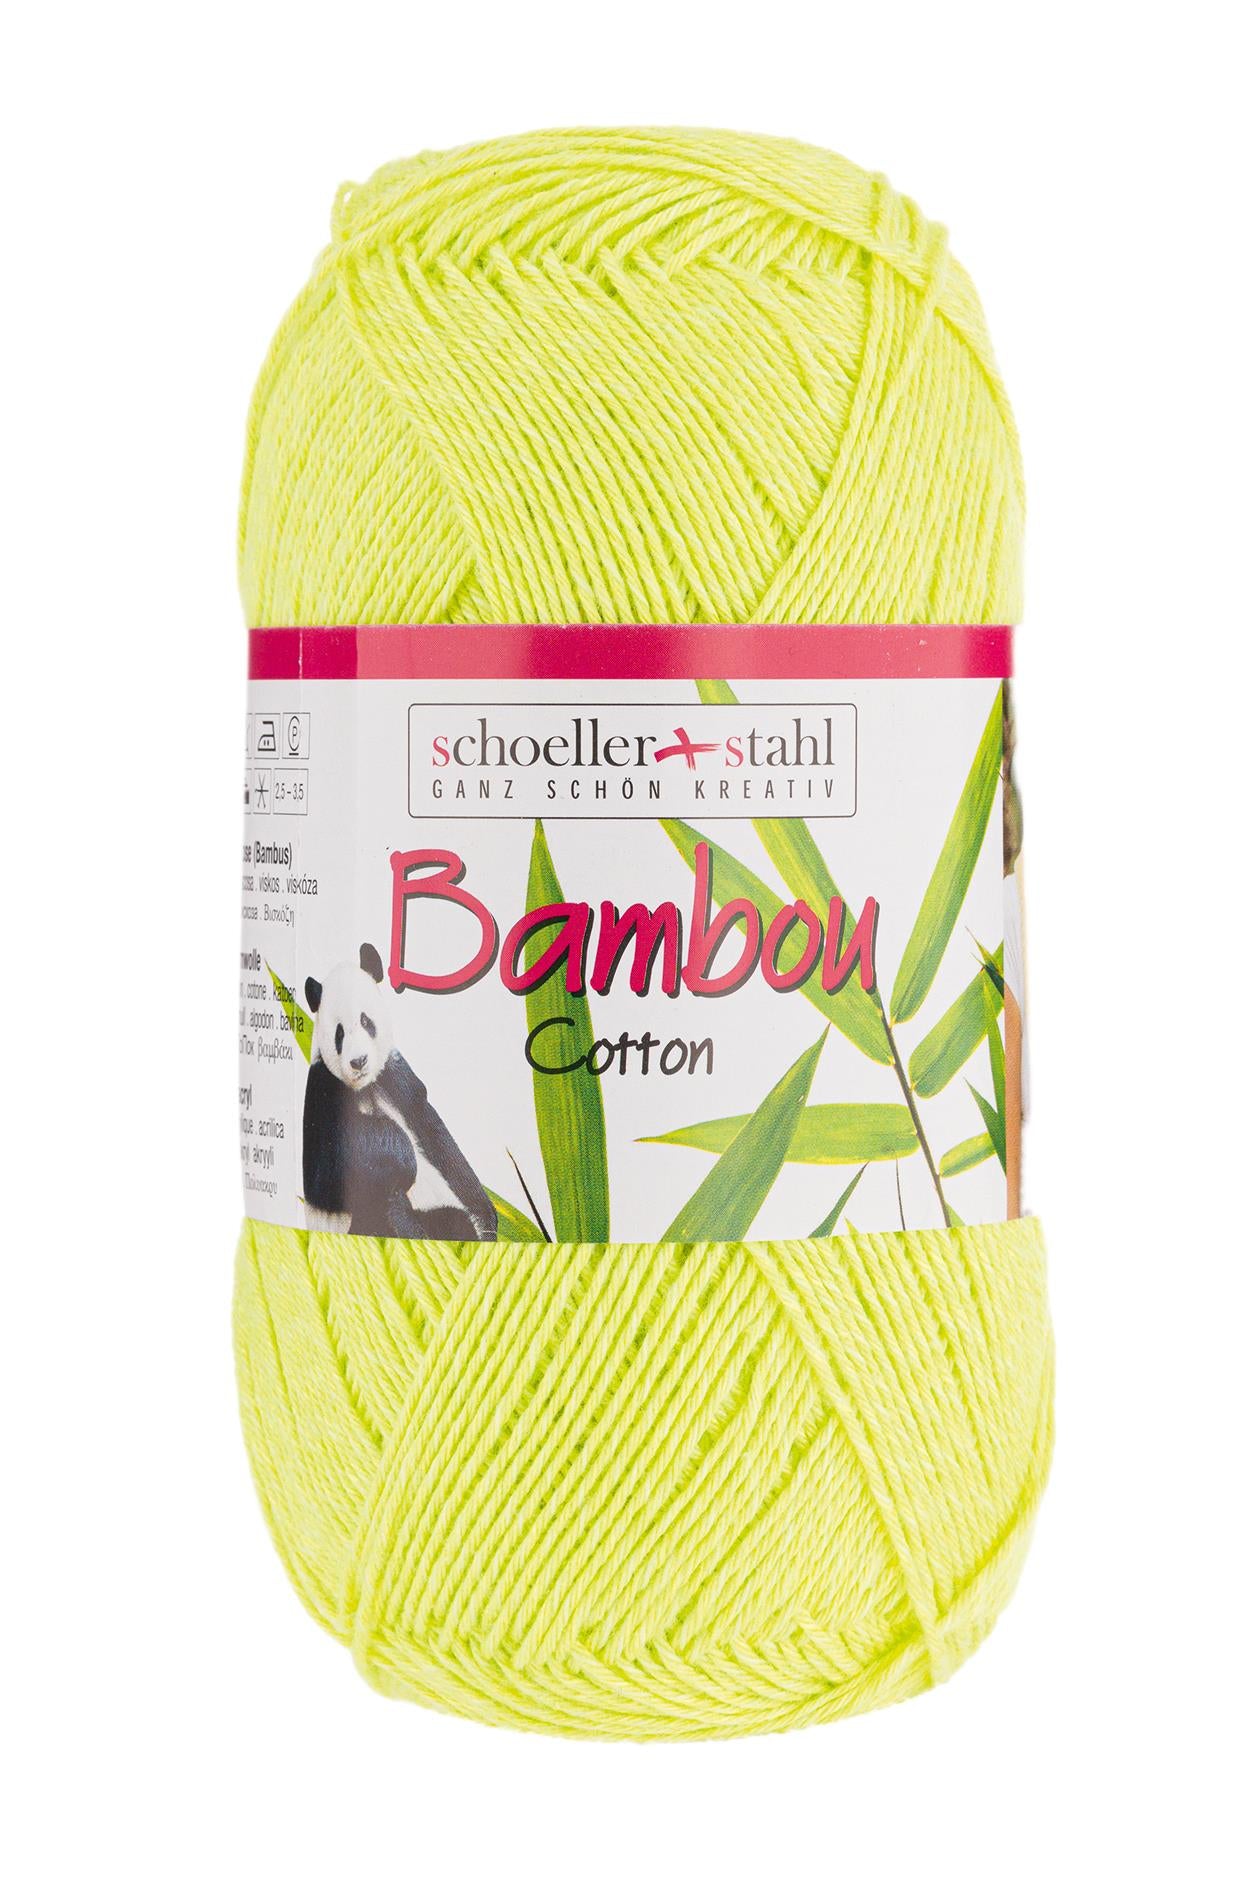 Bambou Cotton 100g, 90286, Farbe 15, vitamin